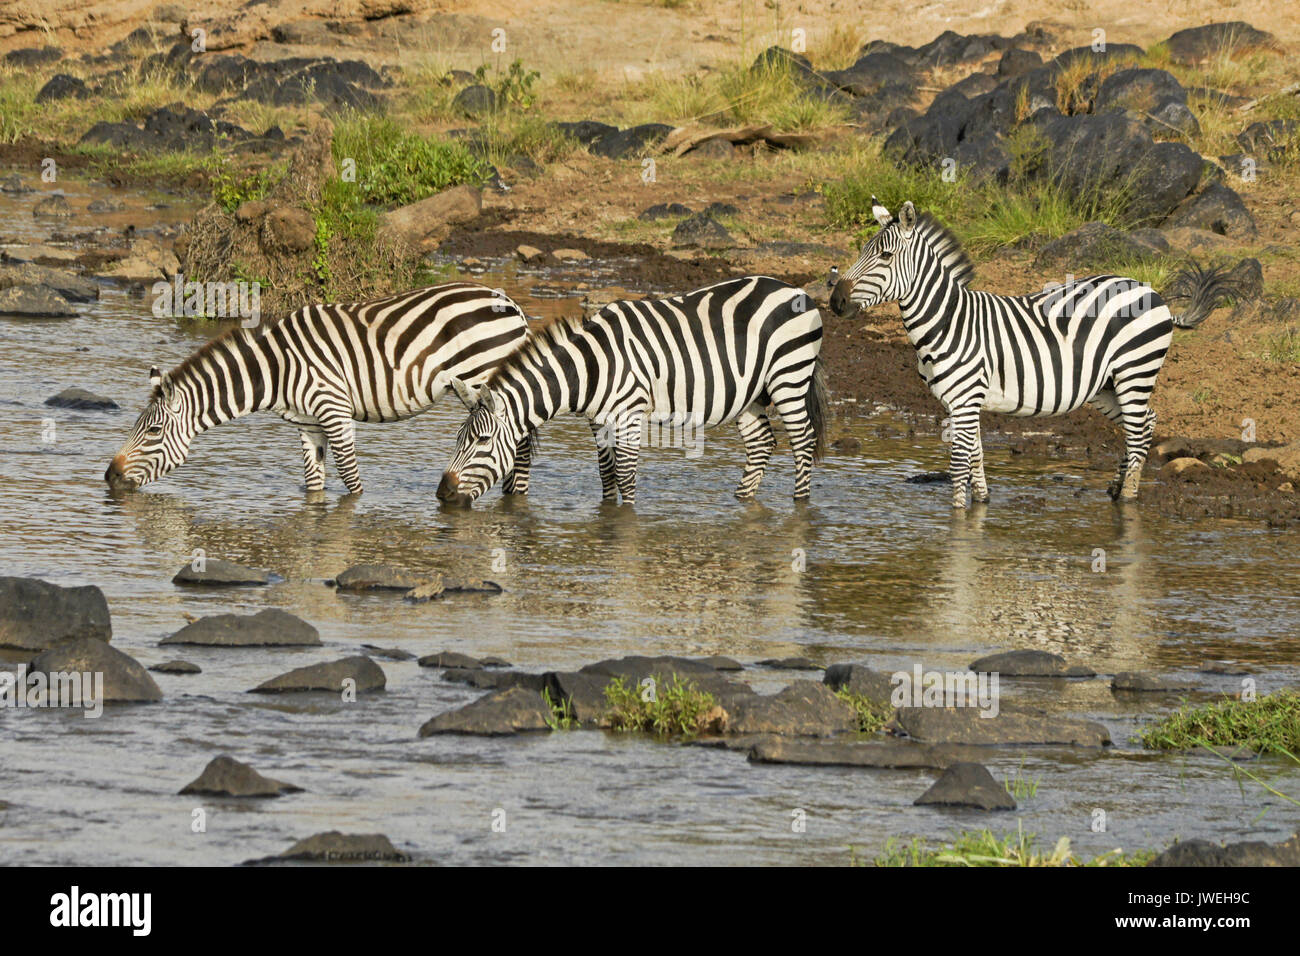 Burchell's (common or plains) zebras drinking in Mara River, Masai Mara Game Reserve, Kenya Stock Photo